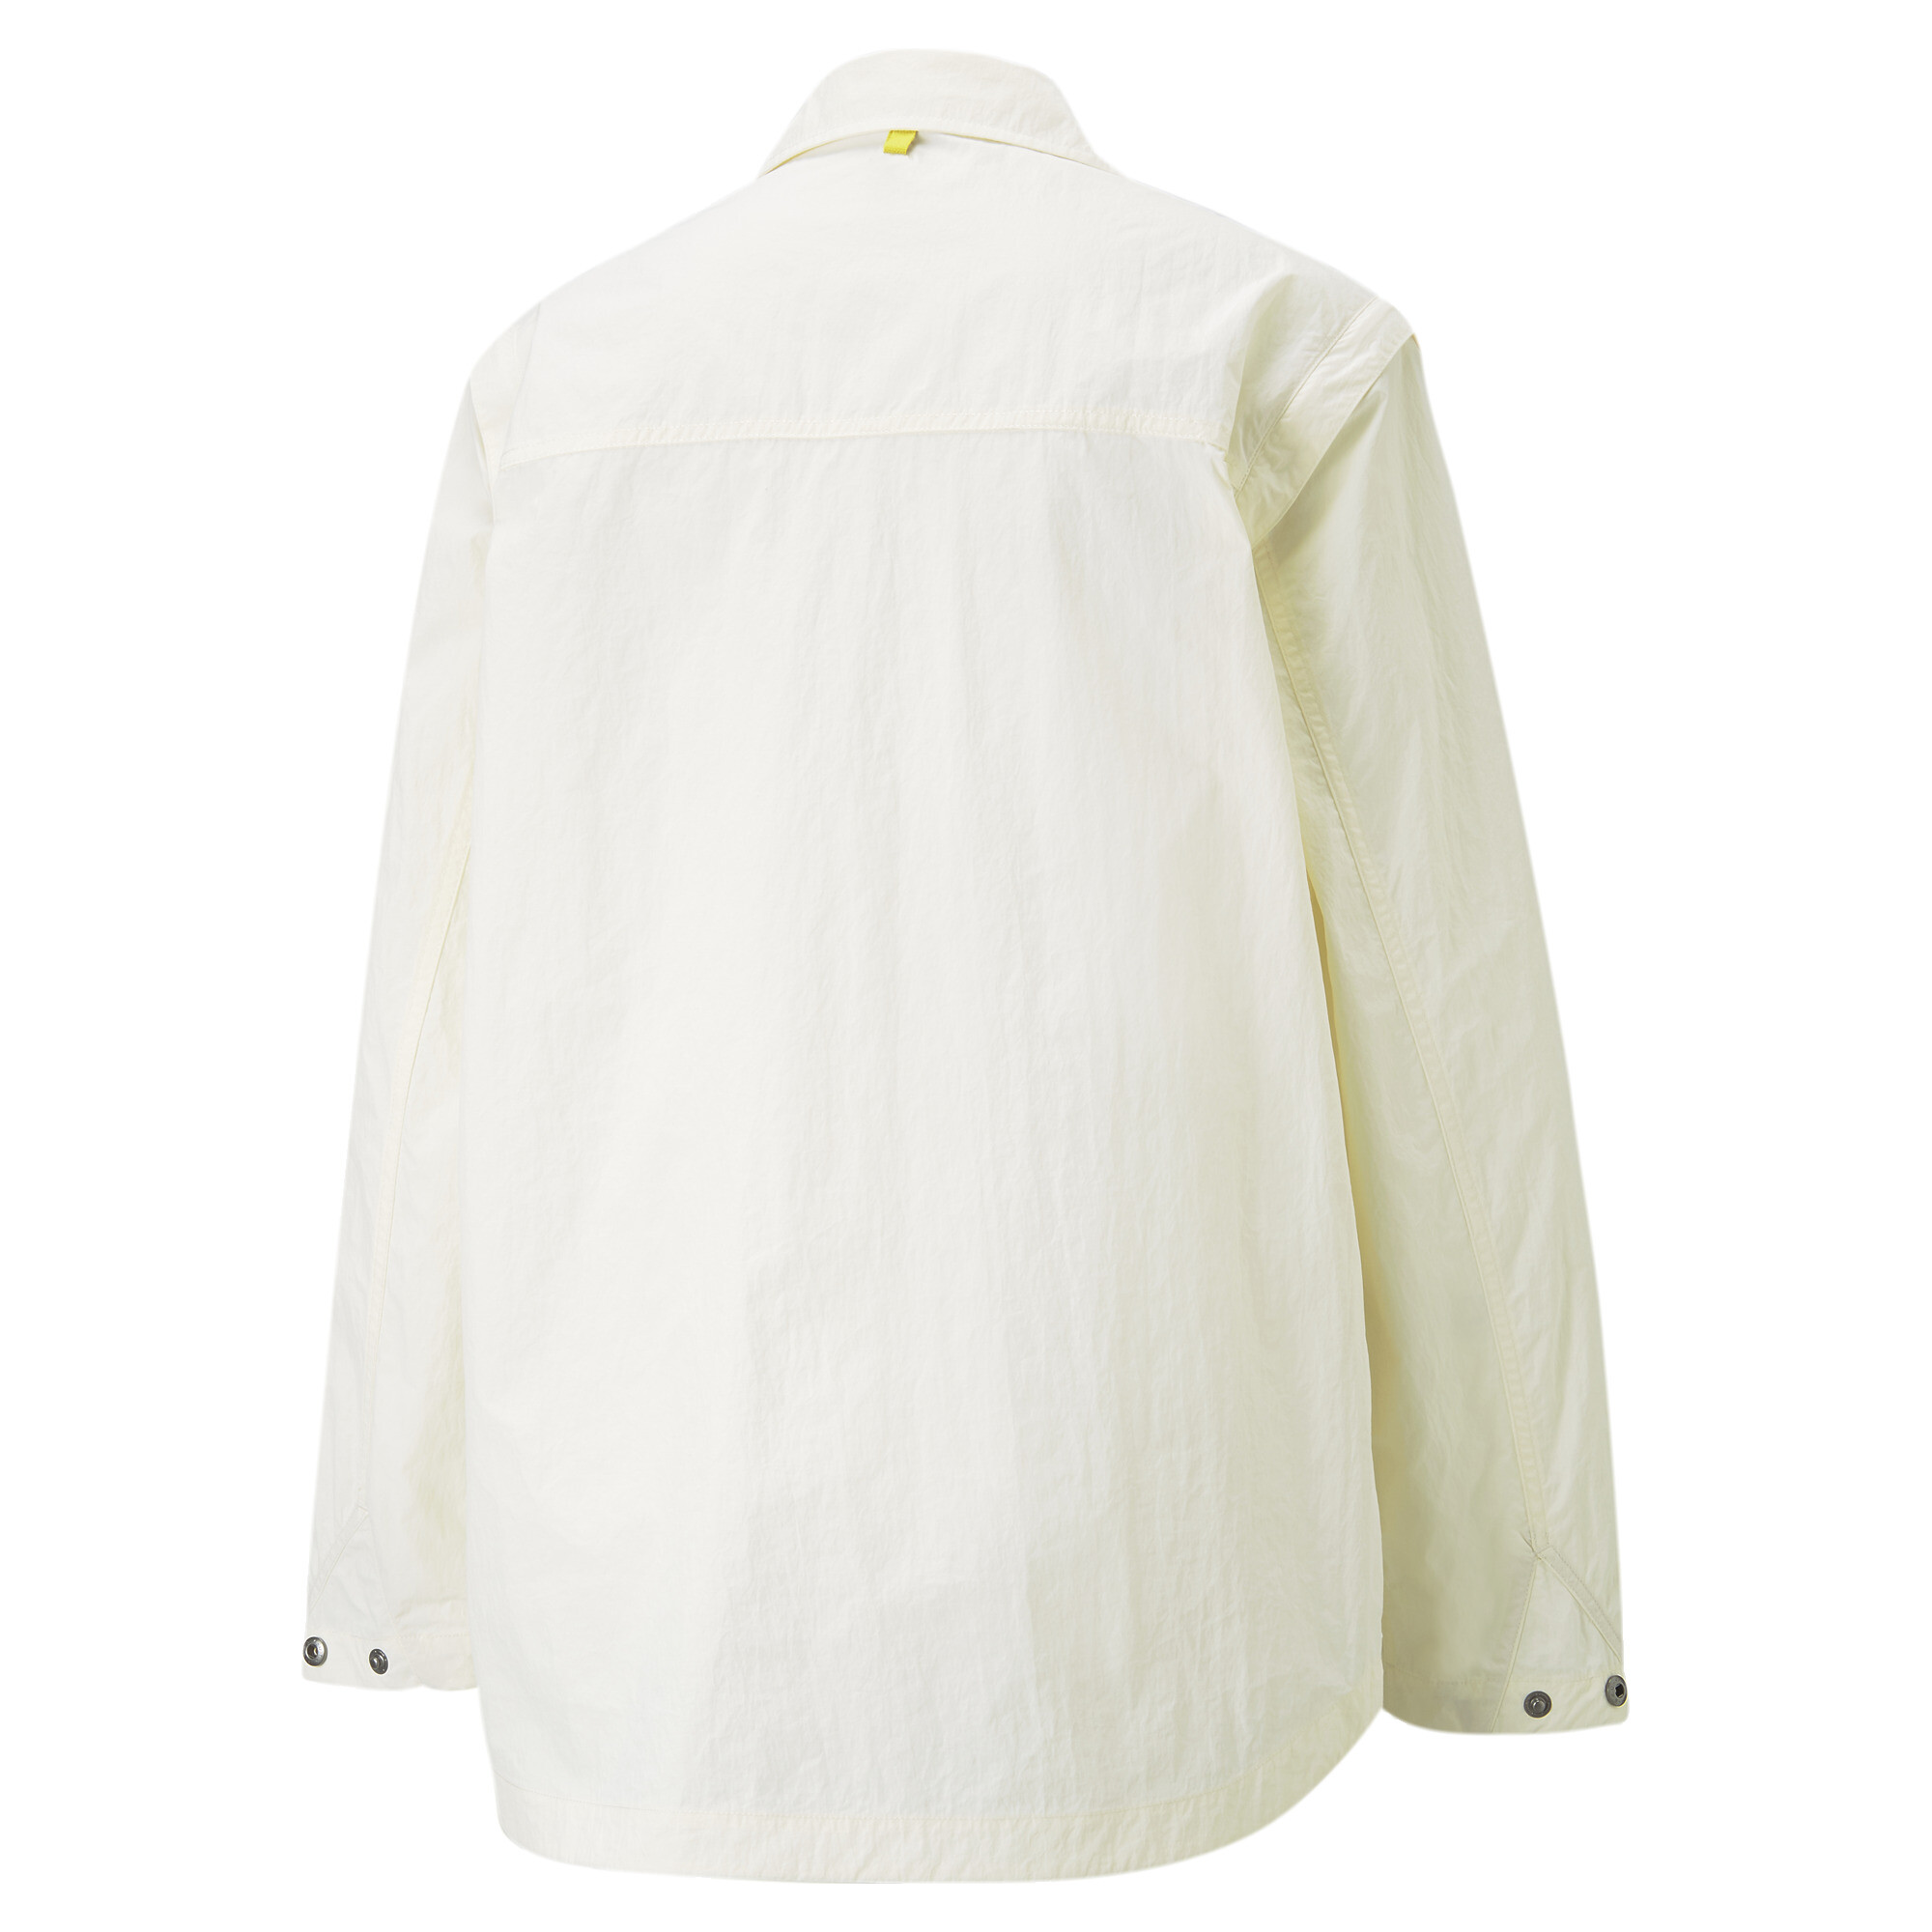 Women's Puma SUNPÅ Zip-Off Jacket, White, Size M, Clothing